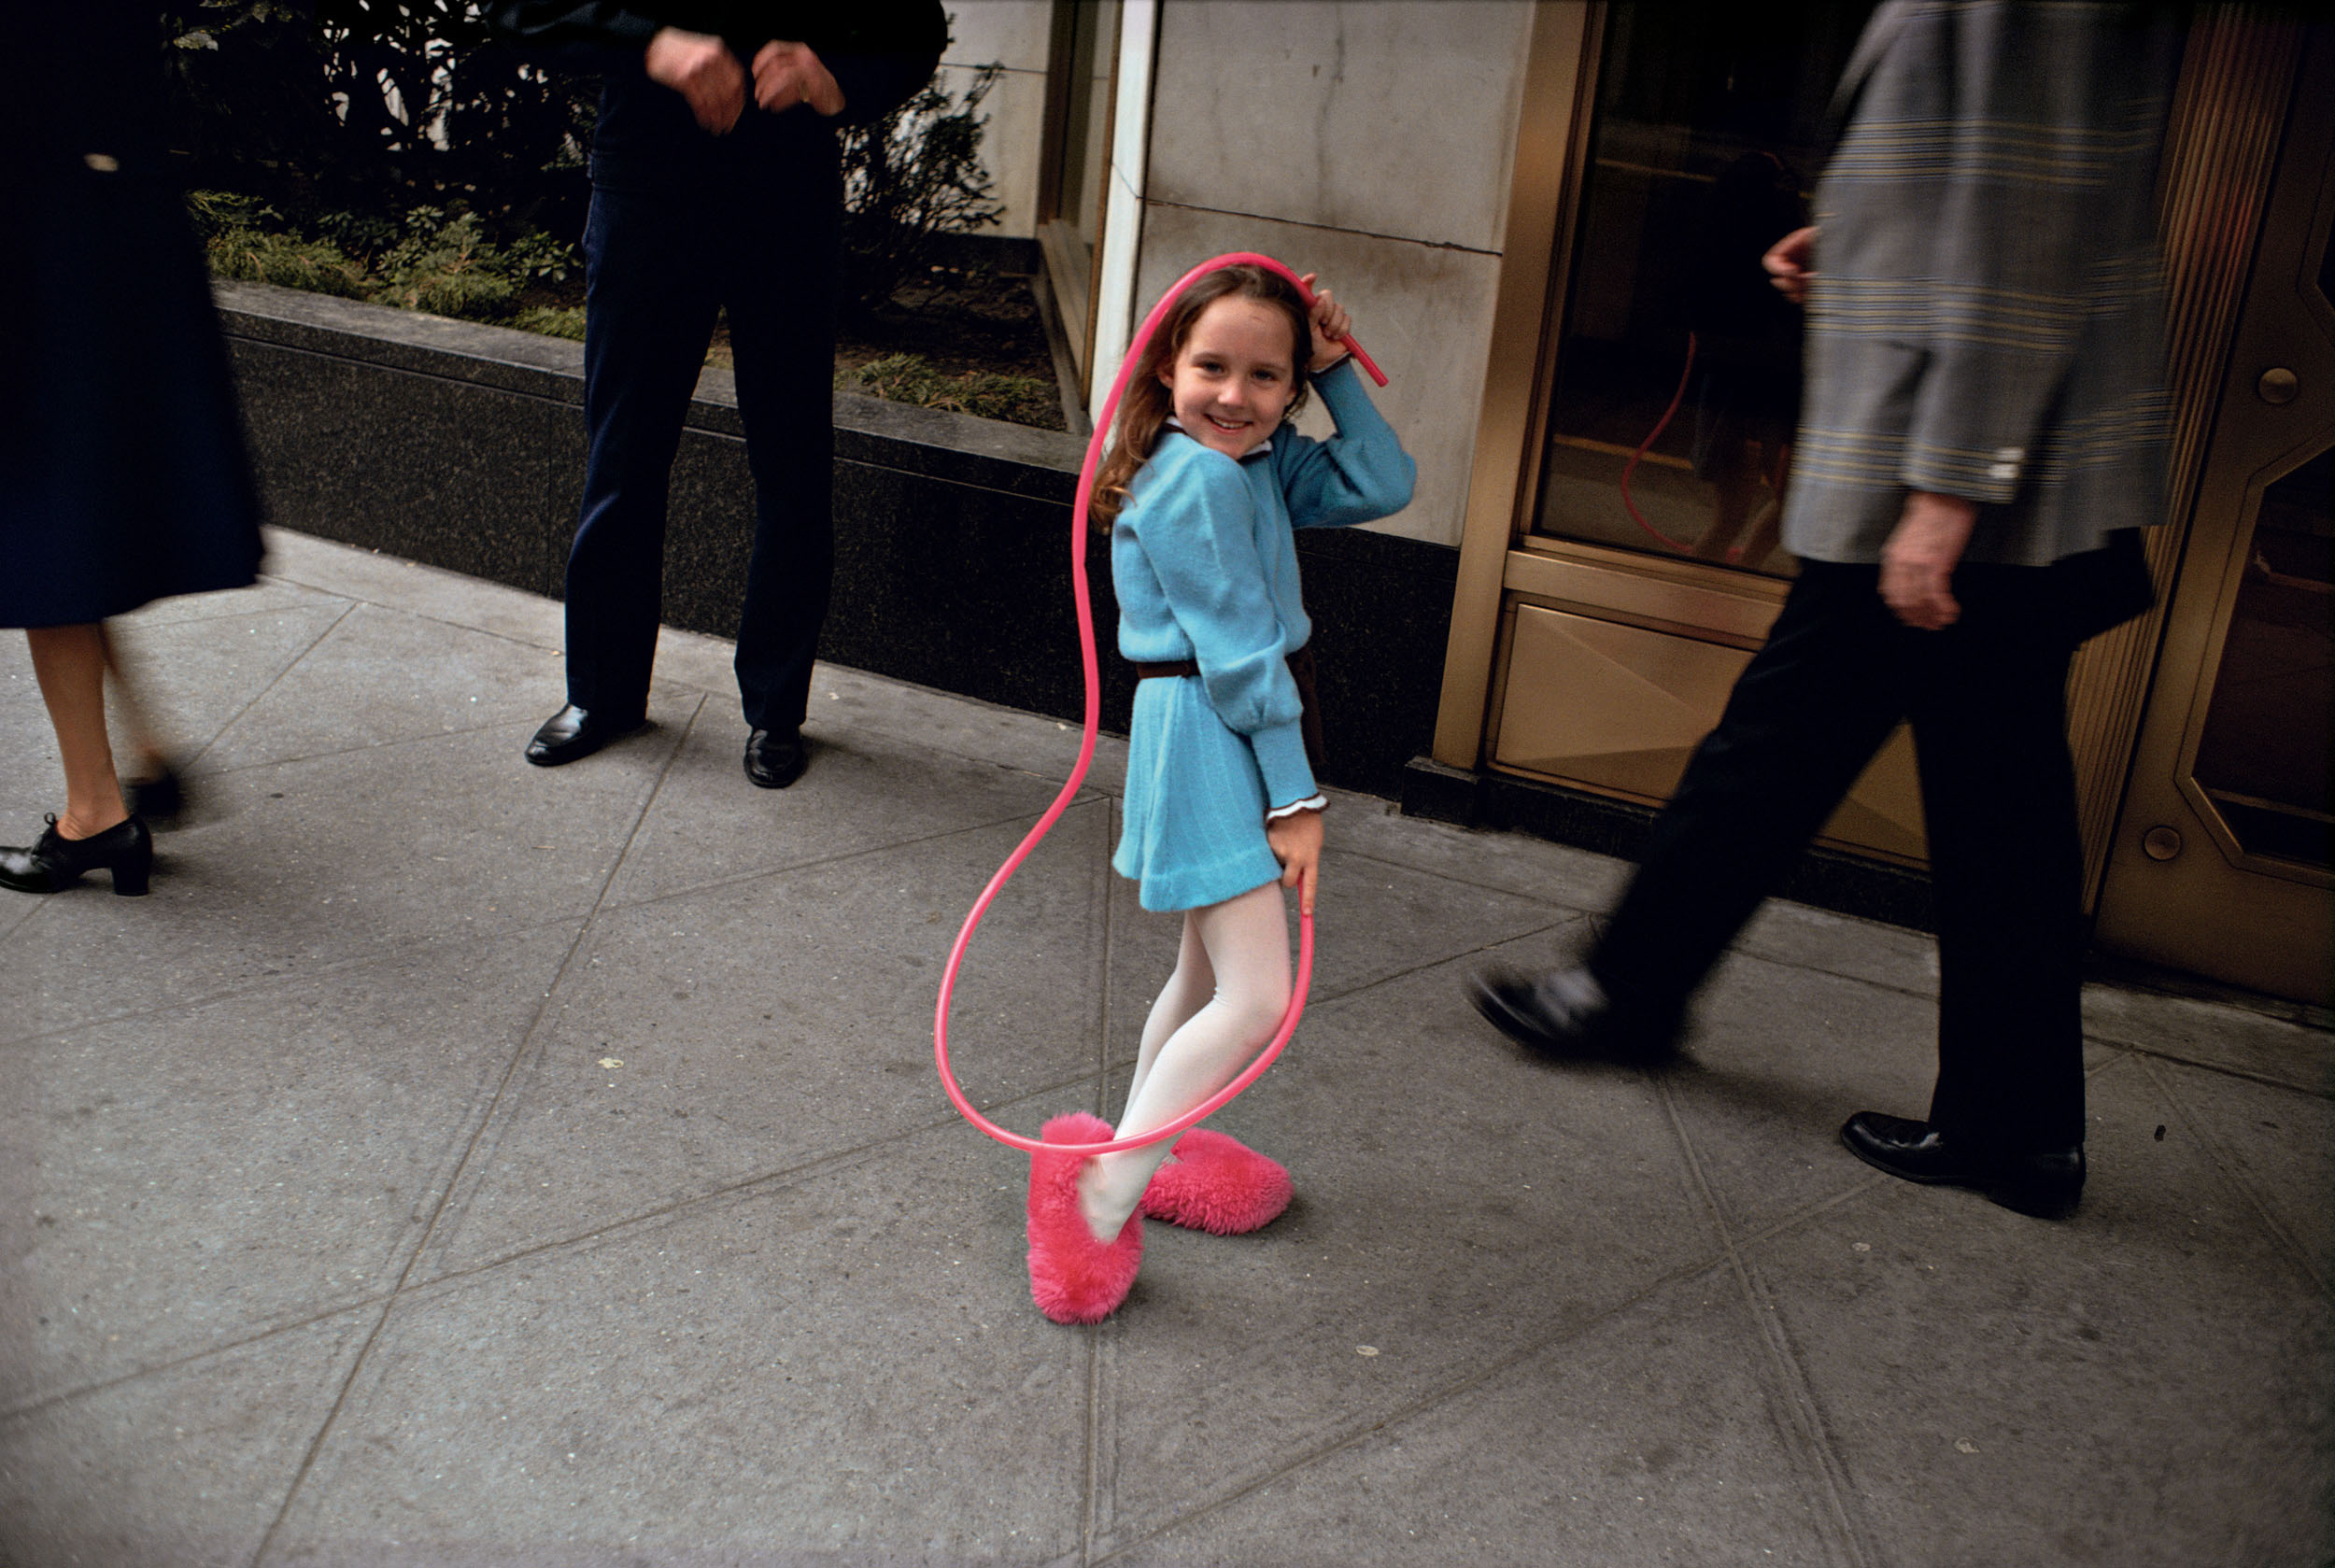 9th Street, New York, 1974